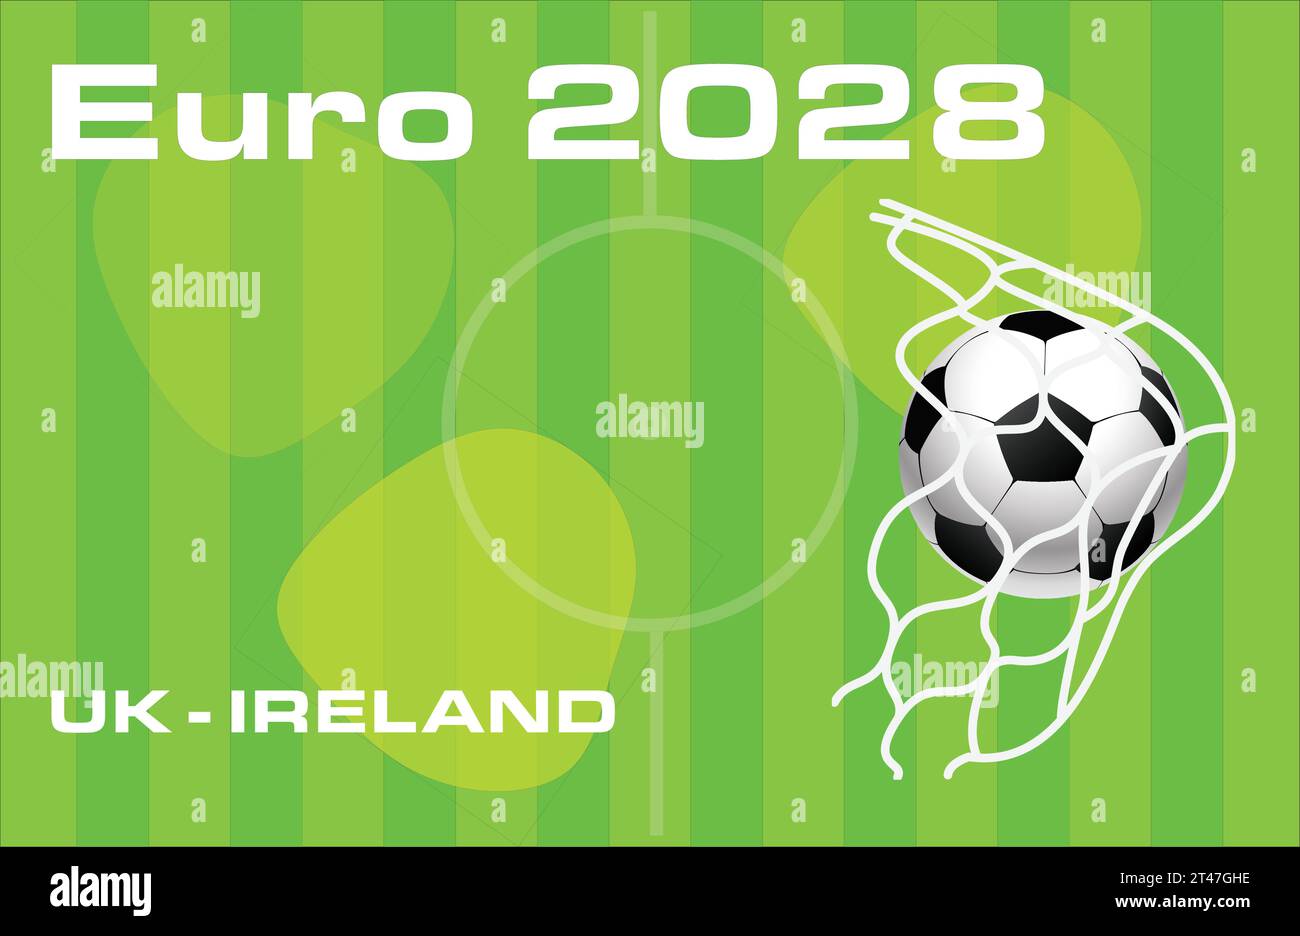 Euro 2028 European Football Championship in UK and Ireland - Vector illustration. Stock Vector